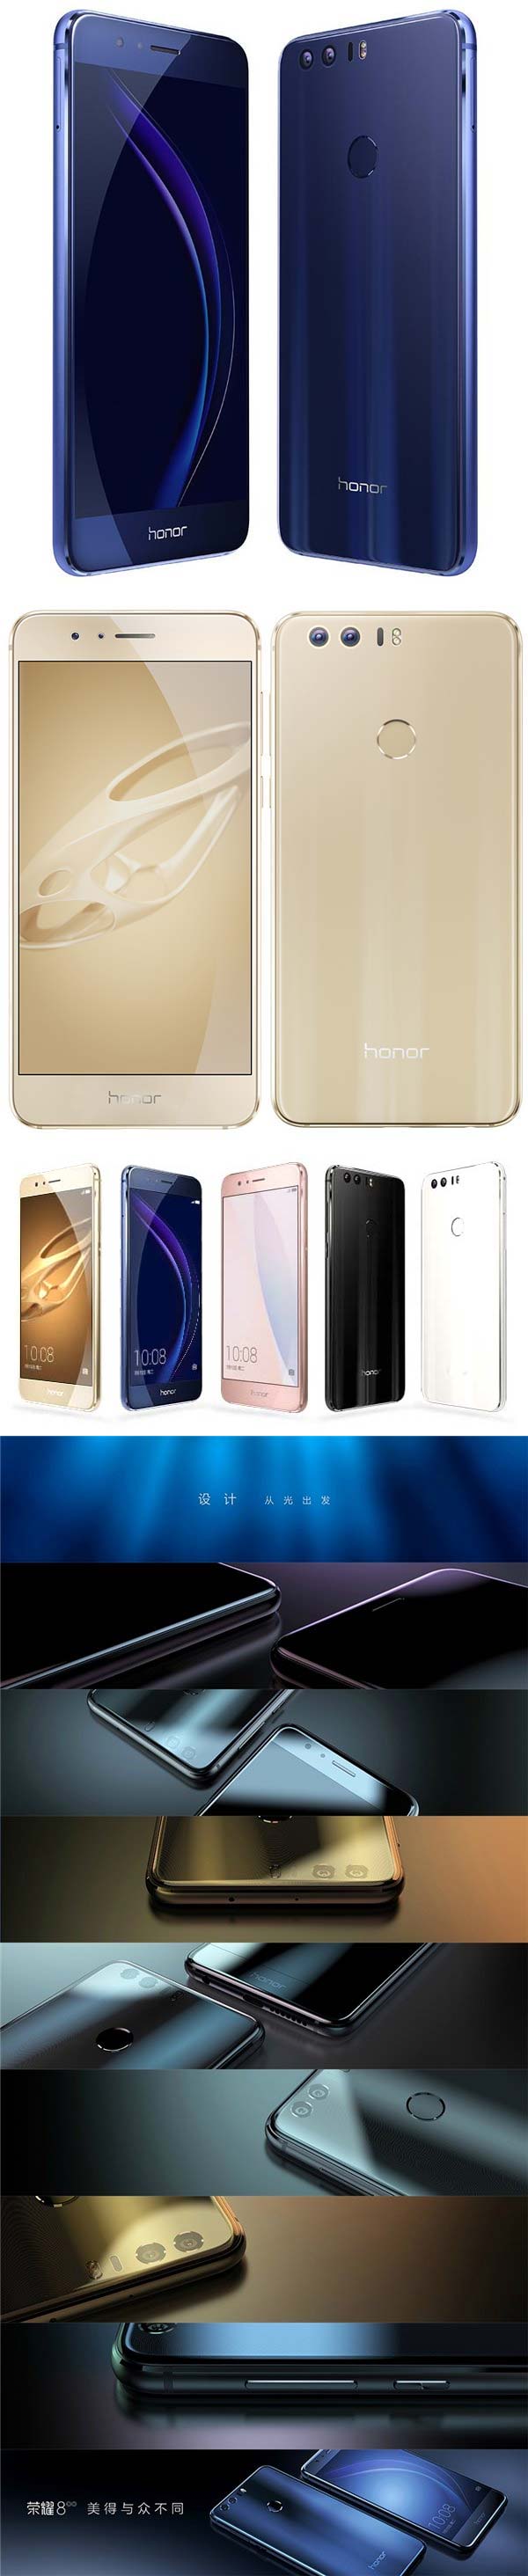 Huawei Honor 8, официально